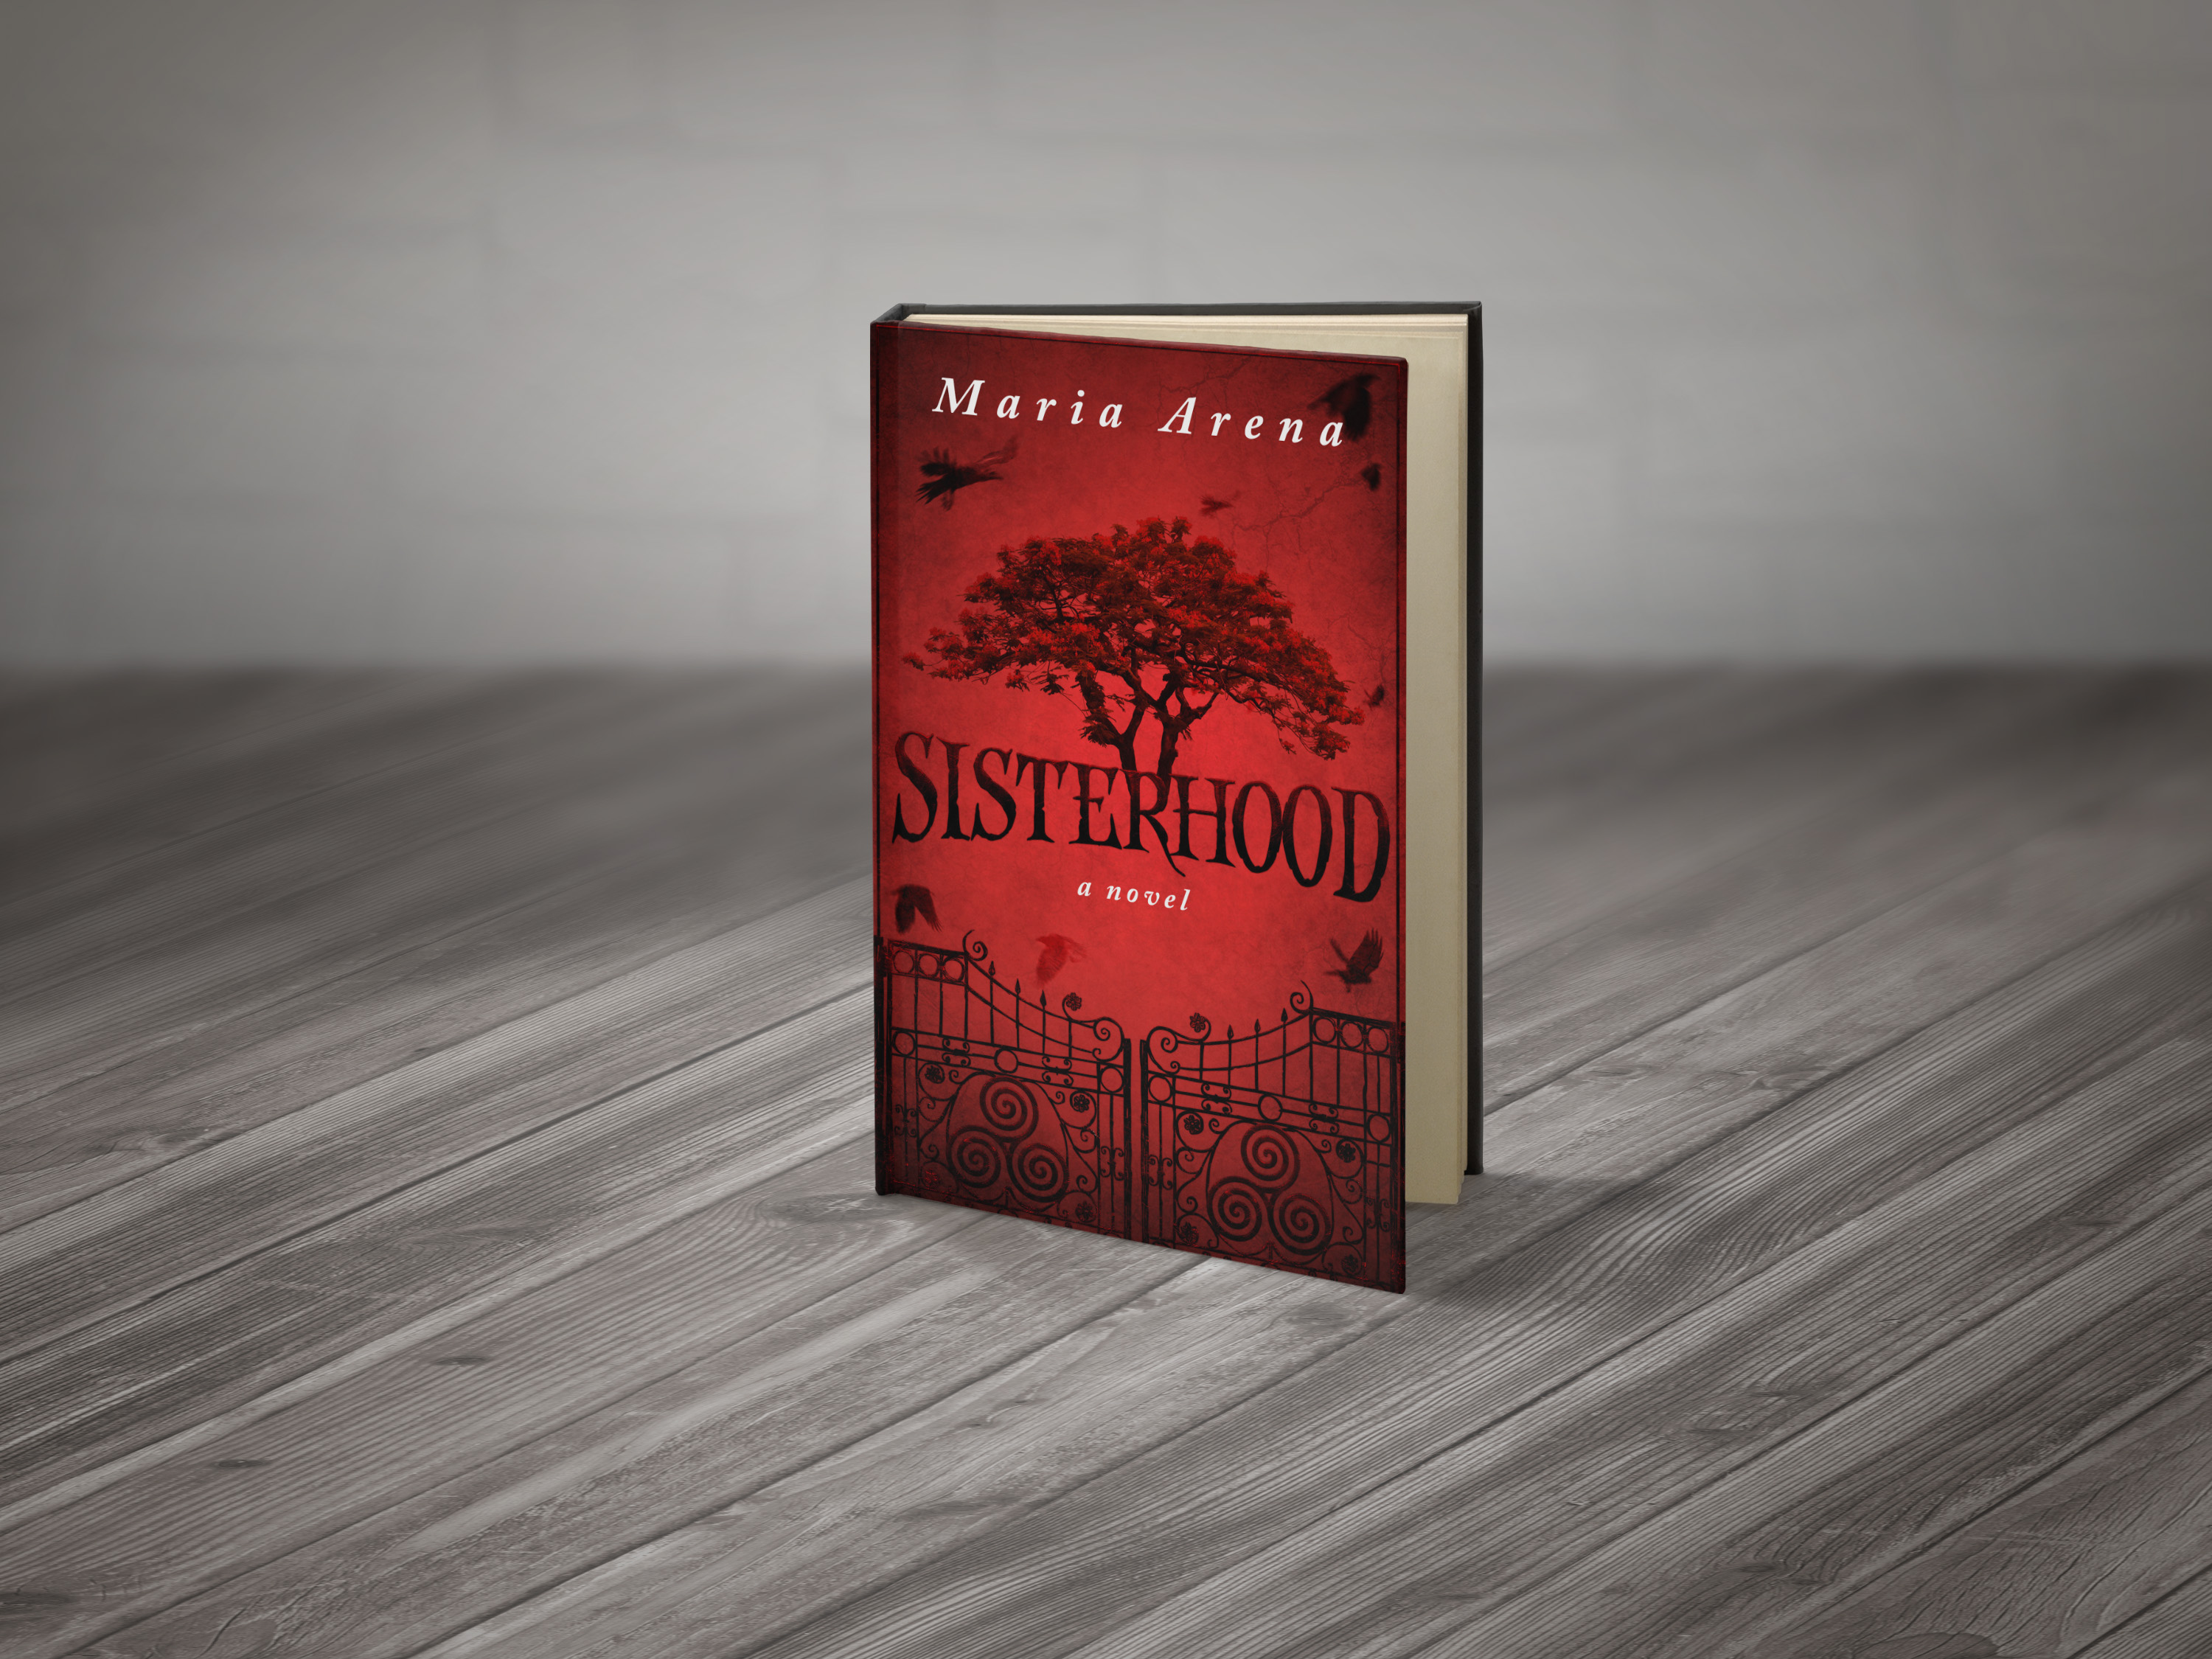 Sisterhood by Maria Arena